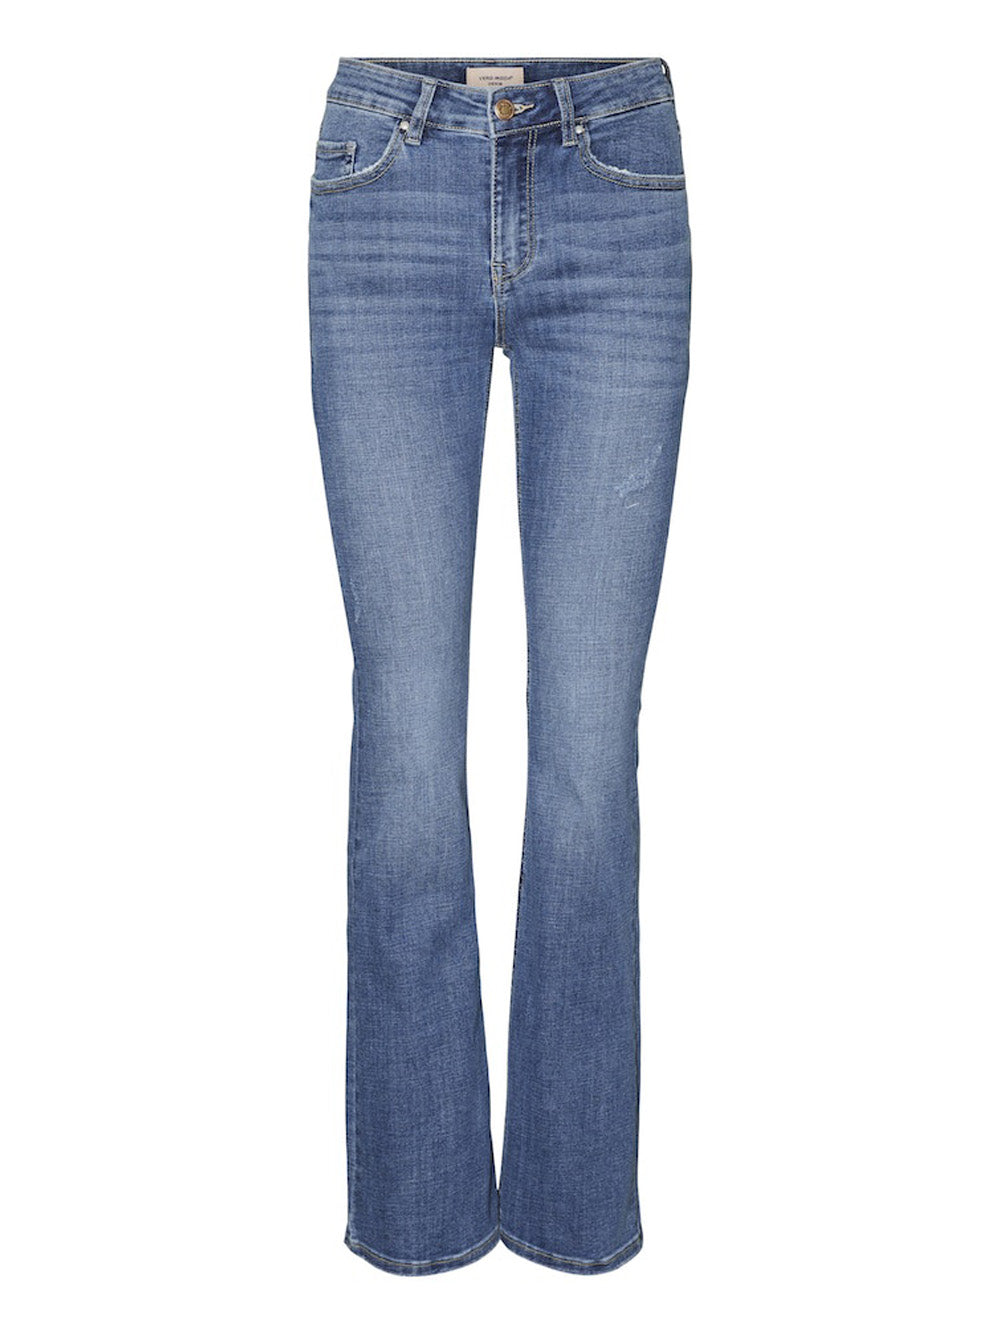 VERO MODA Jeans Donna - Denim modello 10302478